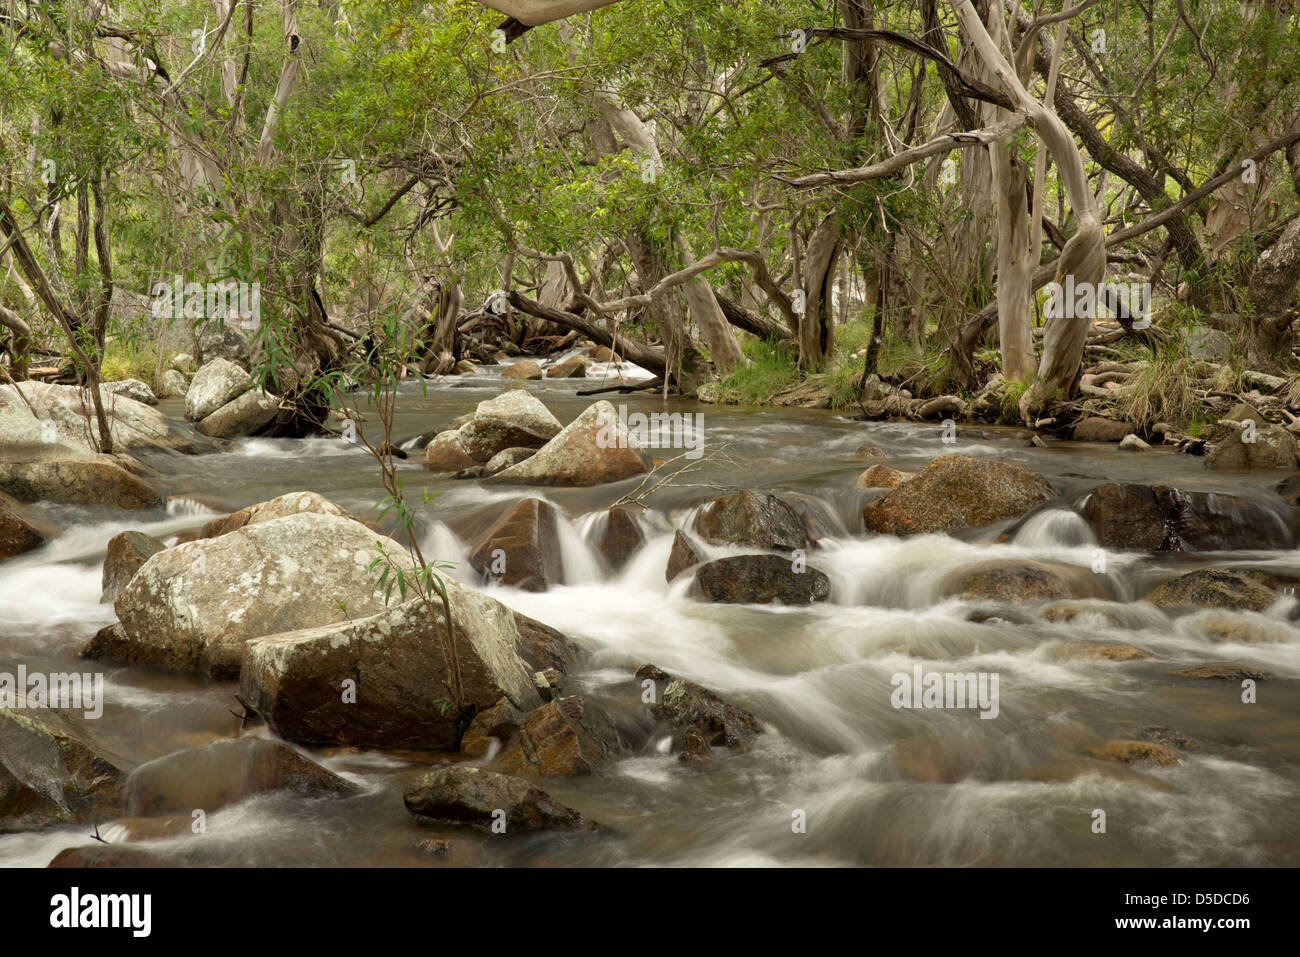 Wandern entlang der Emerald Creek in der Nähe von Mareeba, Queensland Australien Stockfoto